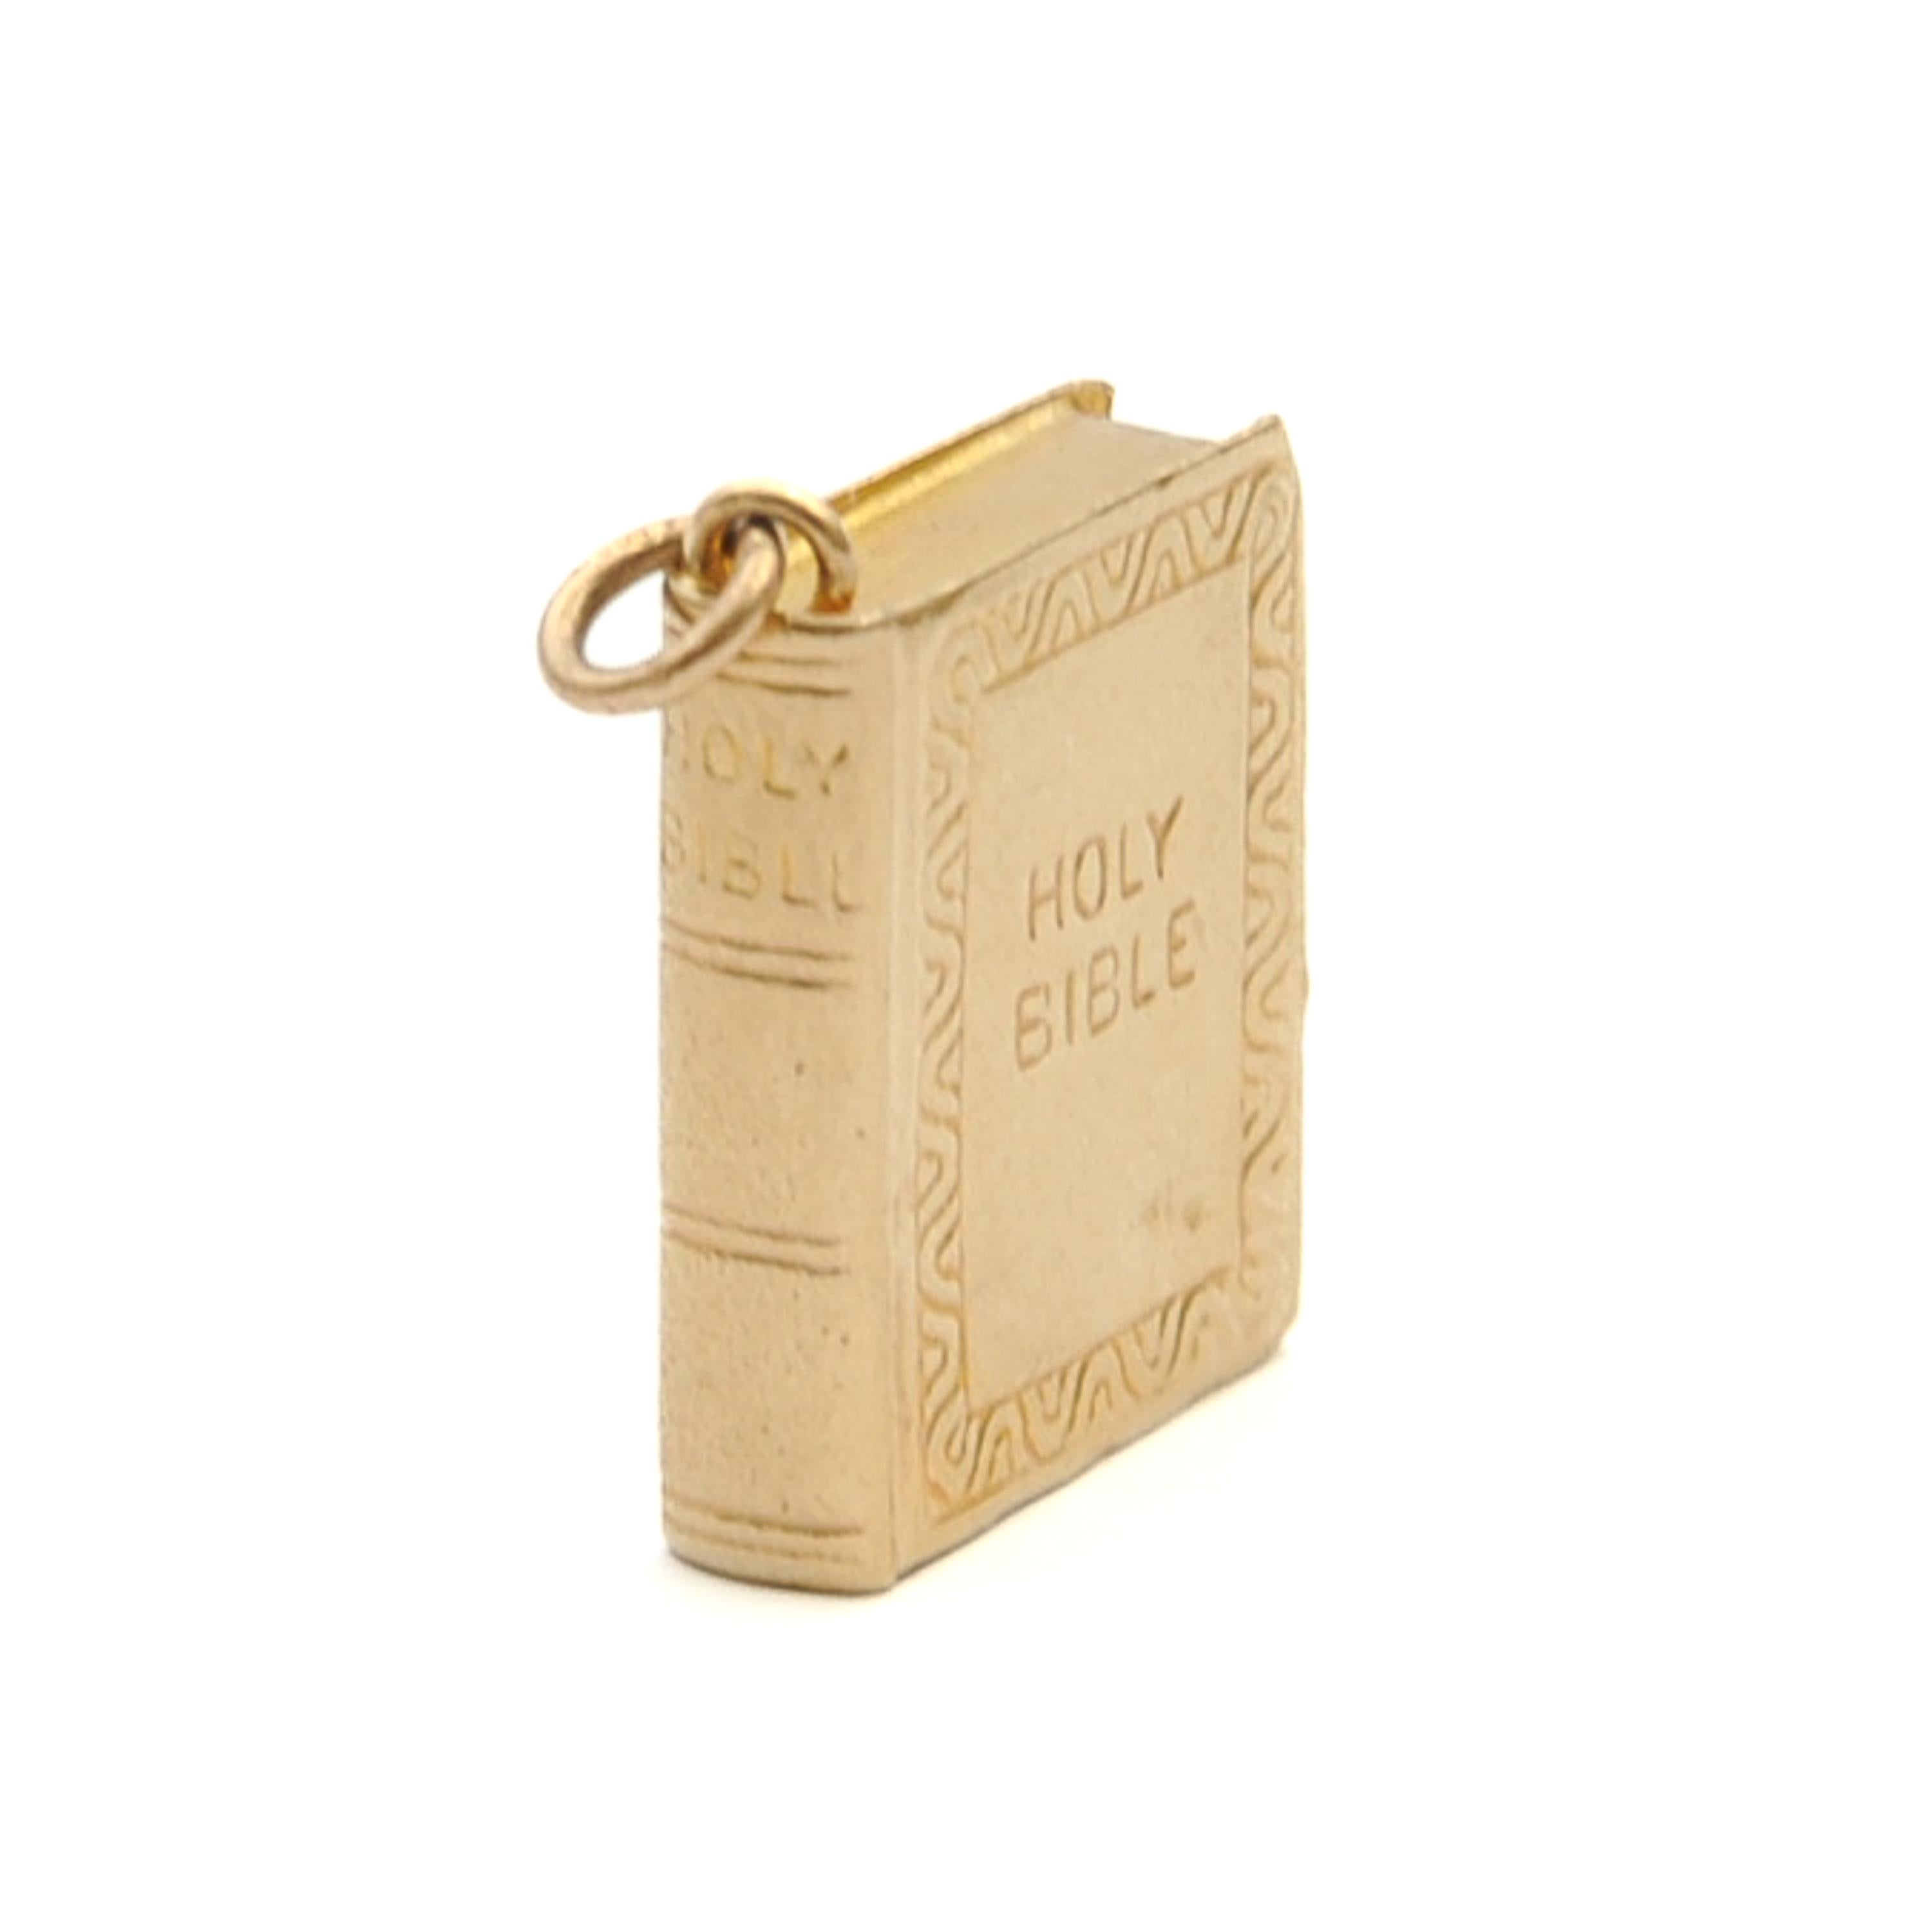 gold holy bible pendant